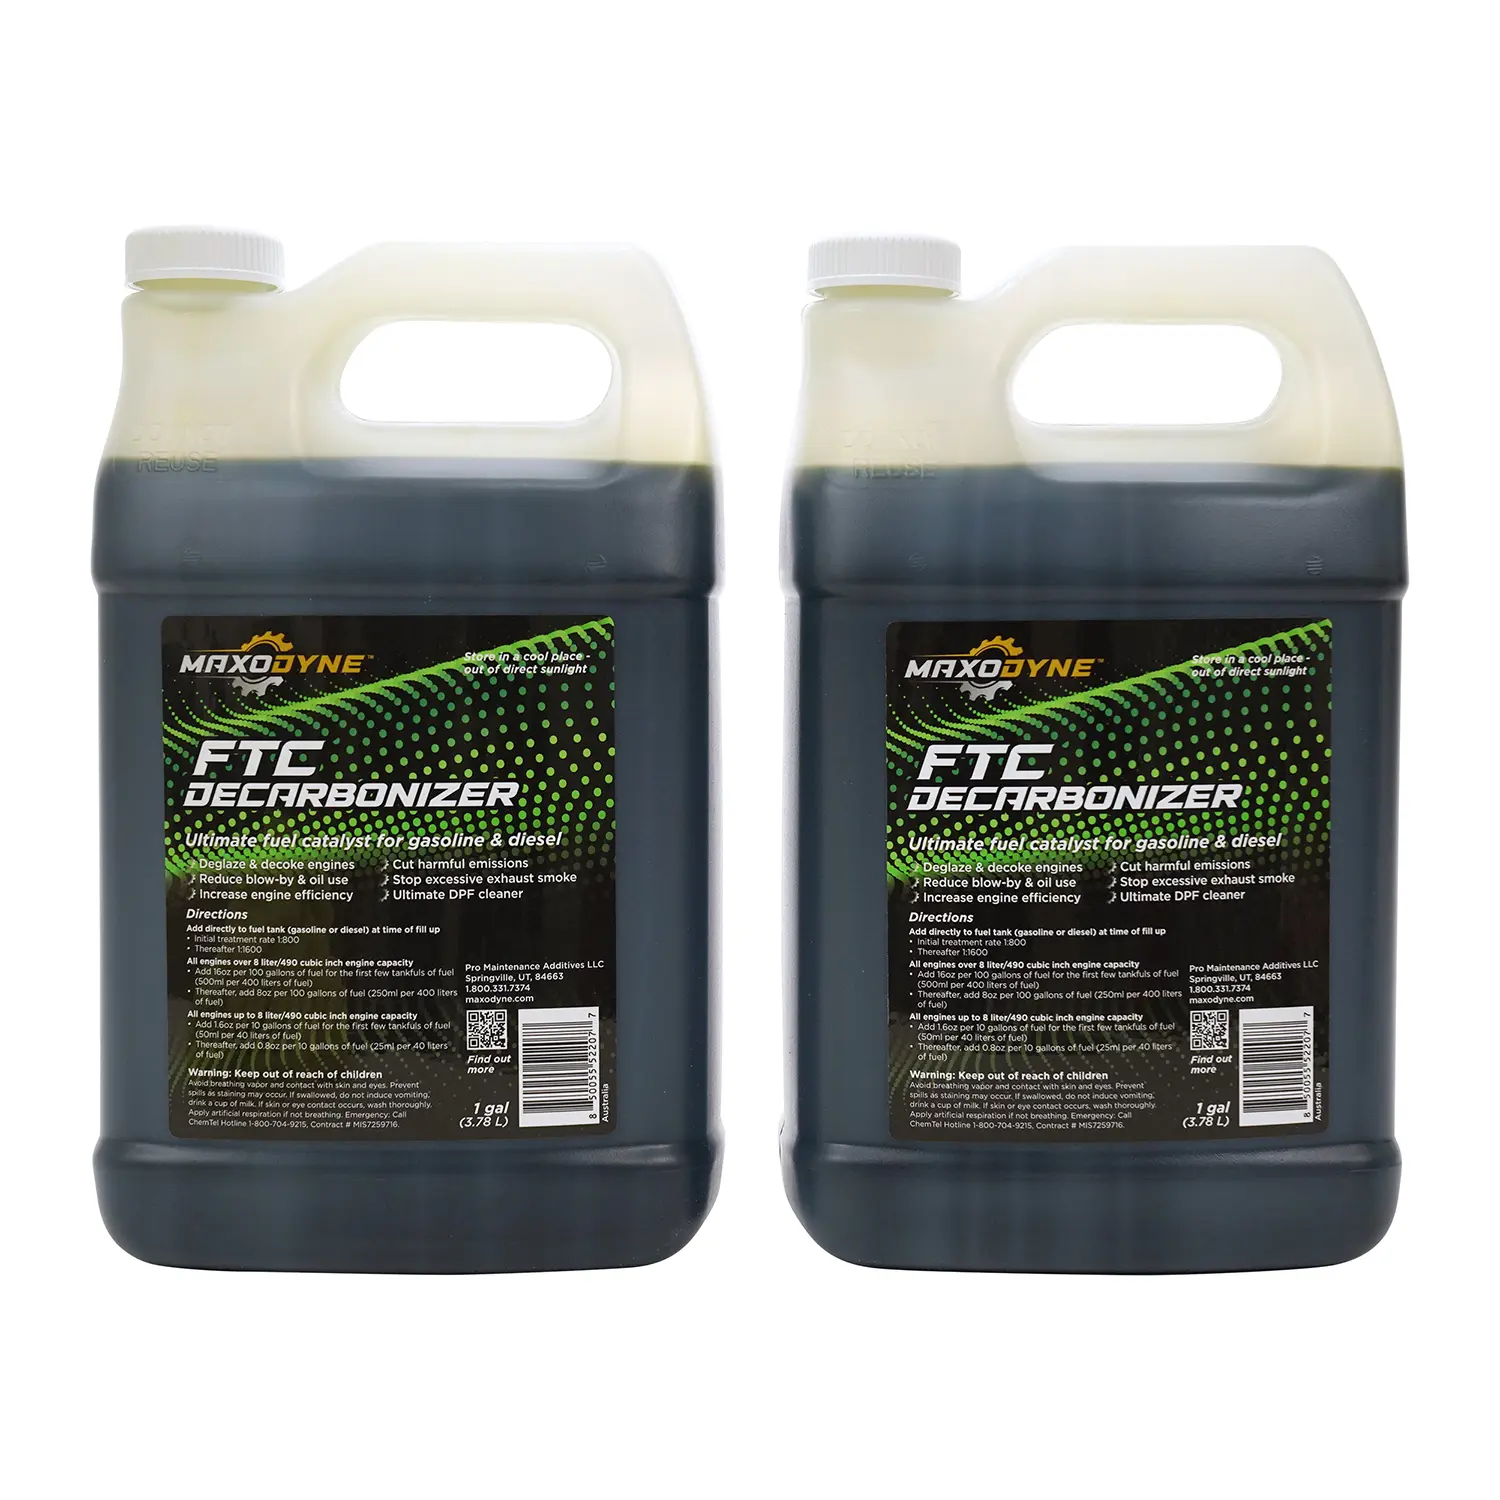 Pro Additives Decarbonizer™ FTC - Maintenance